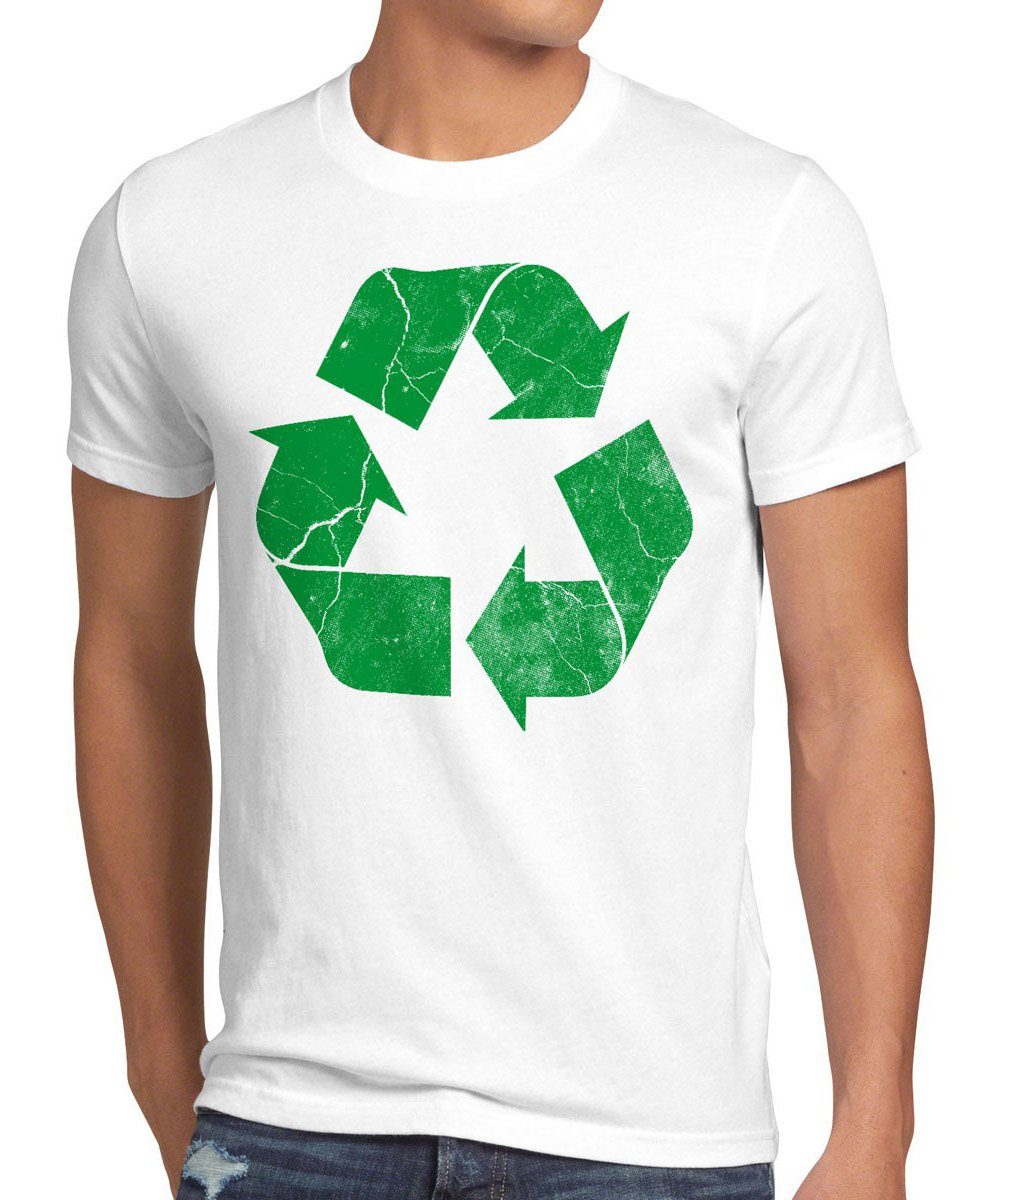 sheldon style3 T-Shirt recycling bang cooper The big leonard Herren Print-Shirt top theory weiß Recycle